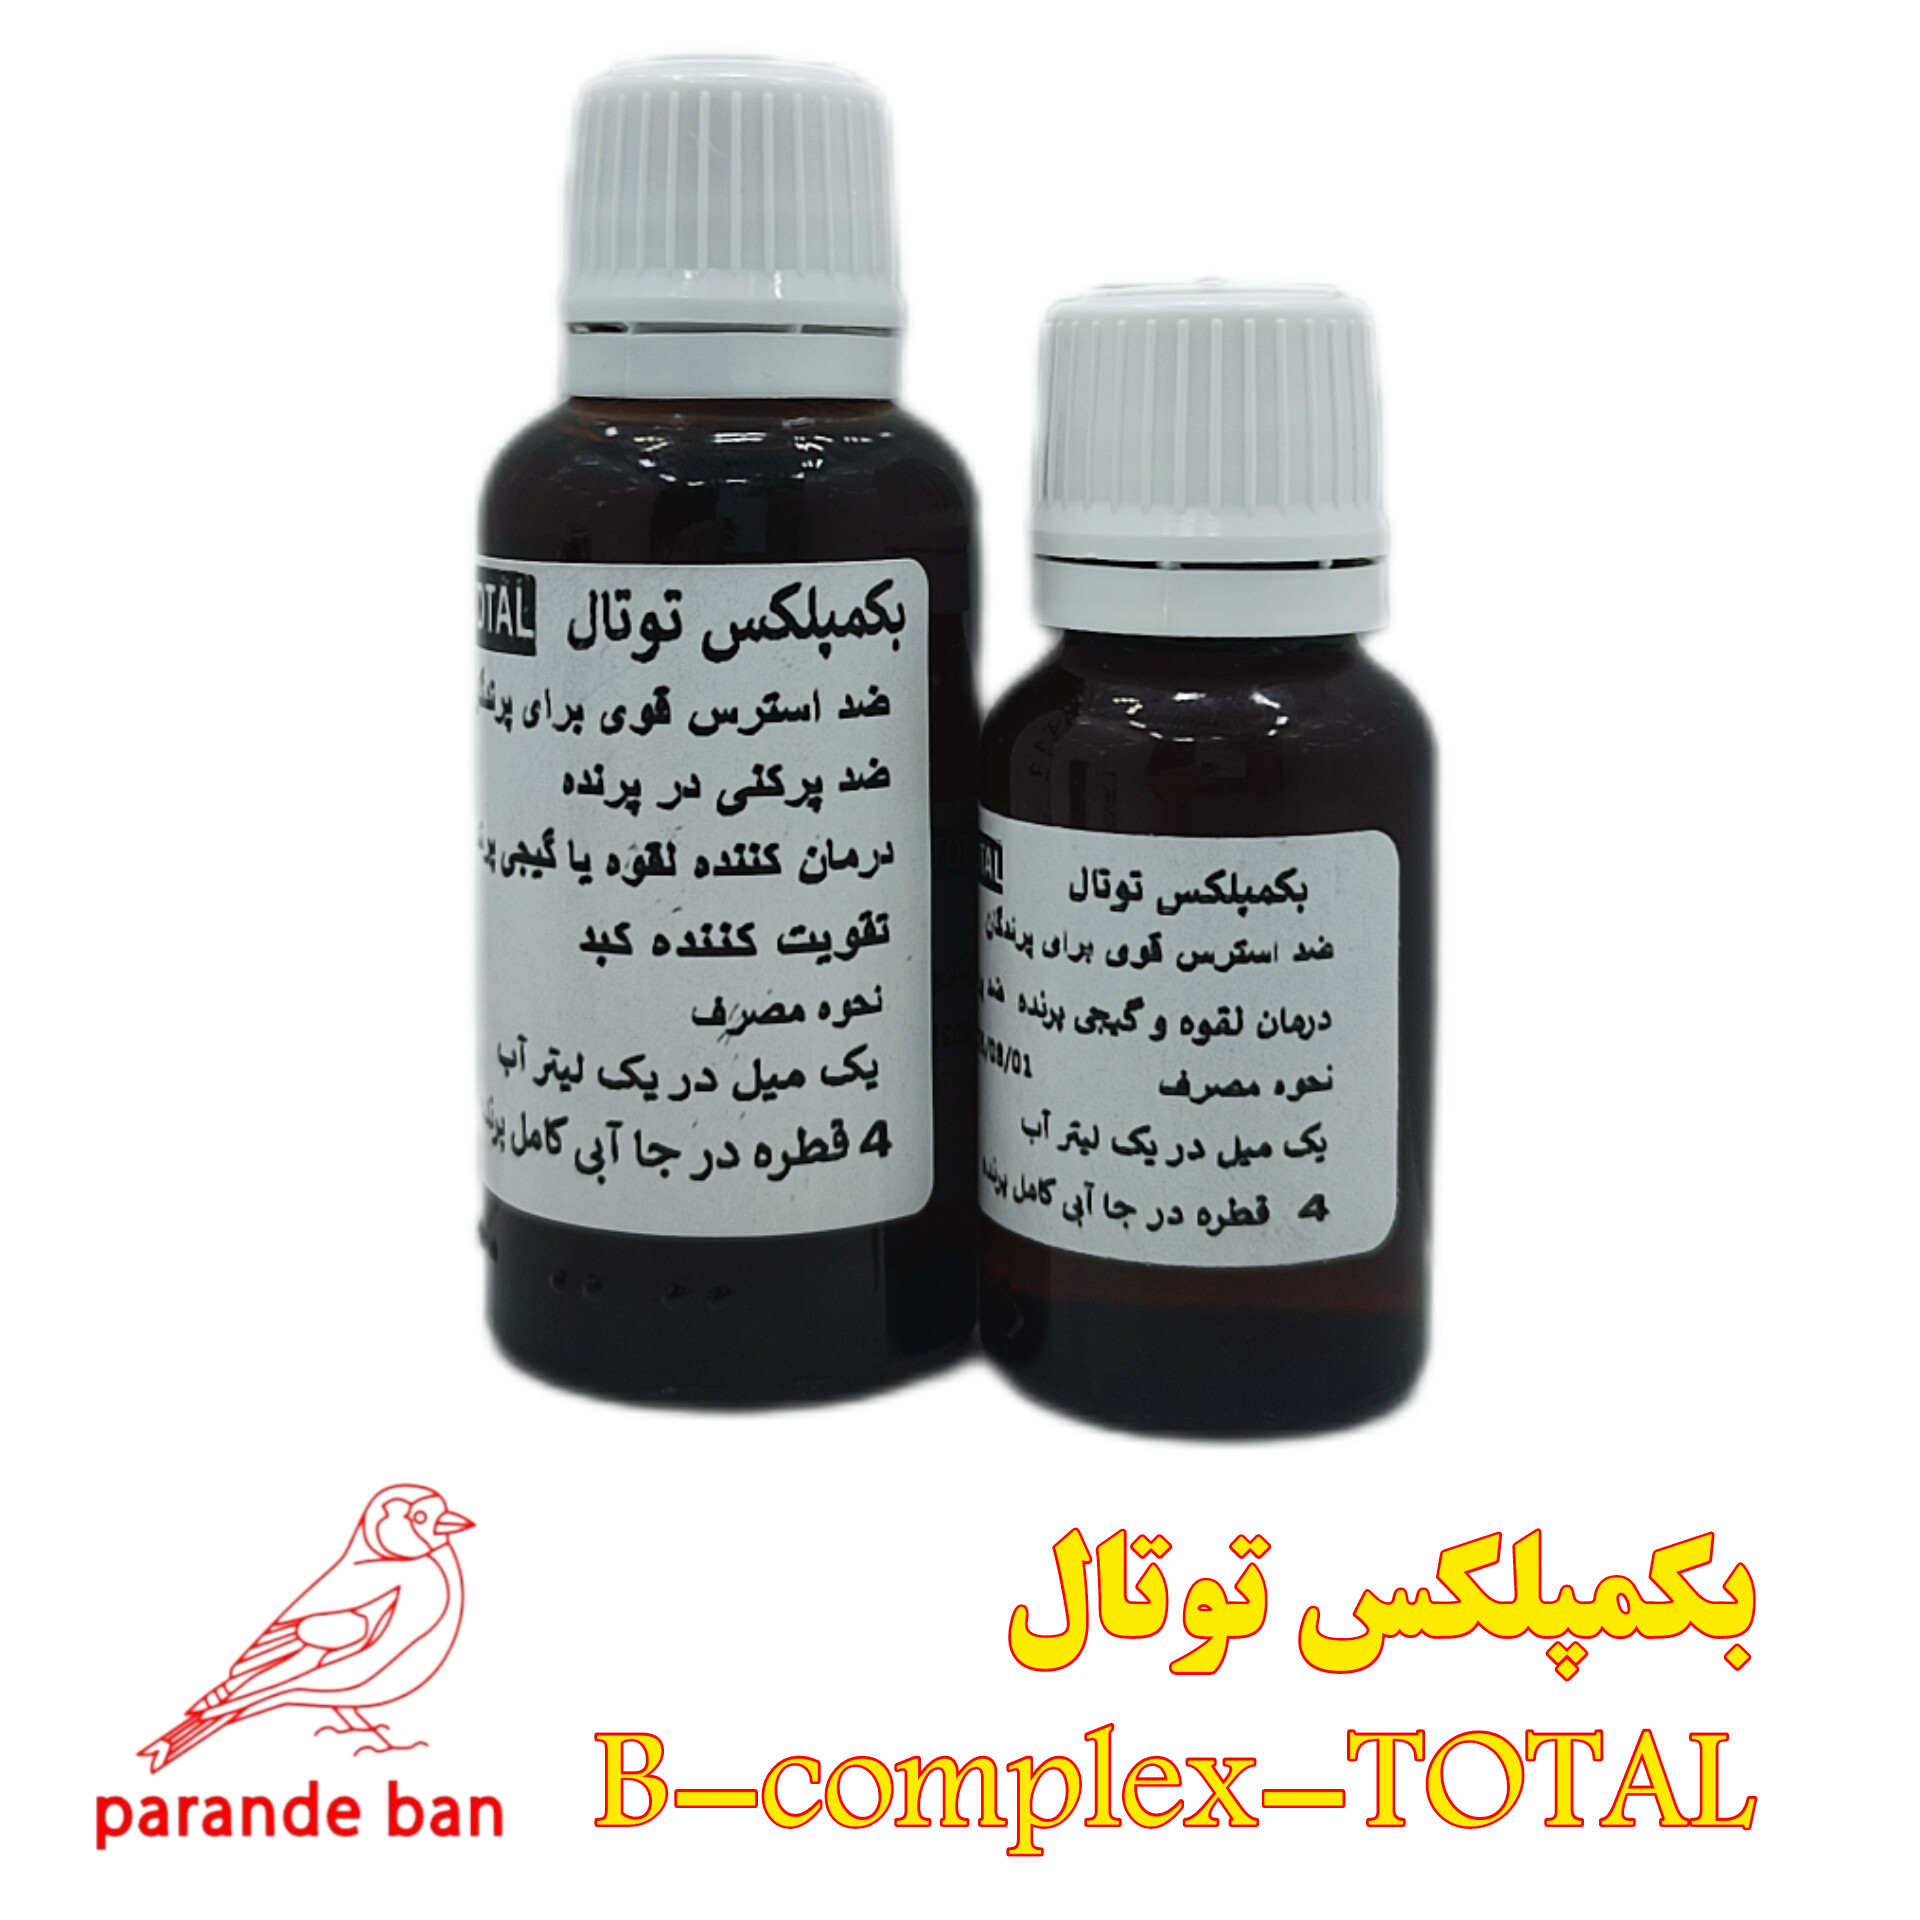 بکمپلکس توتال B-complex - total